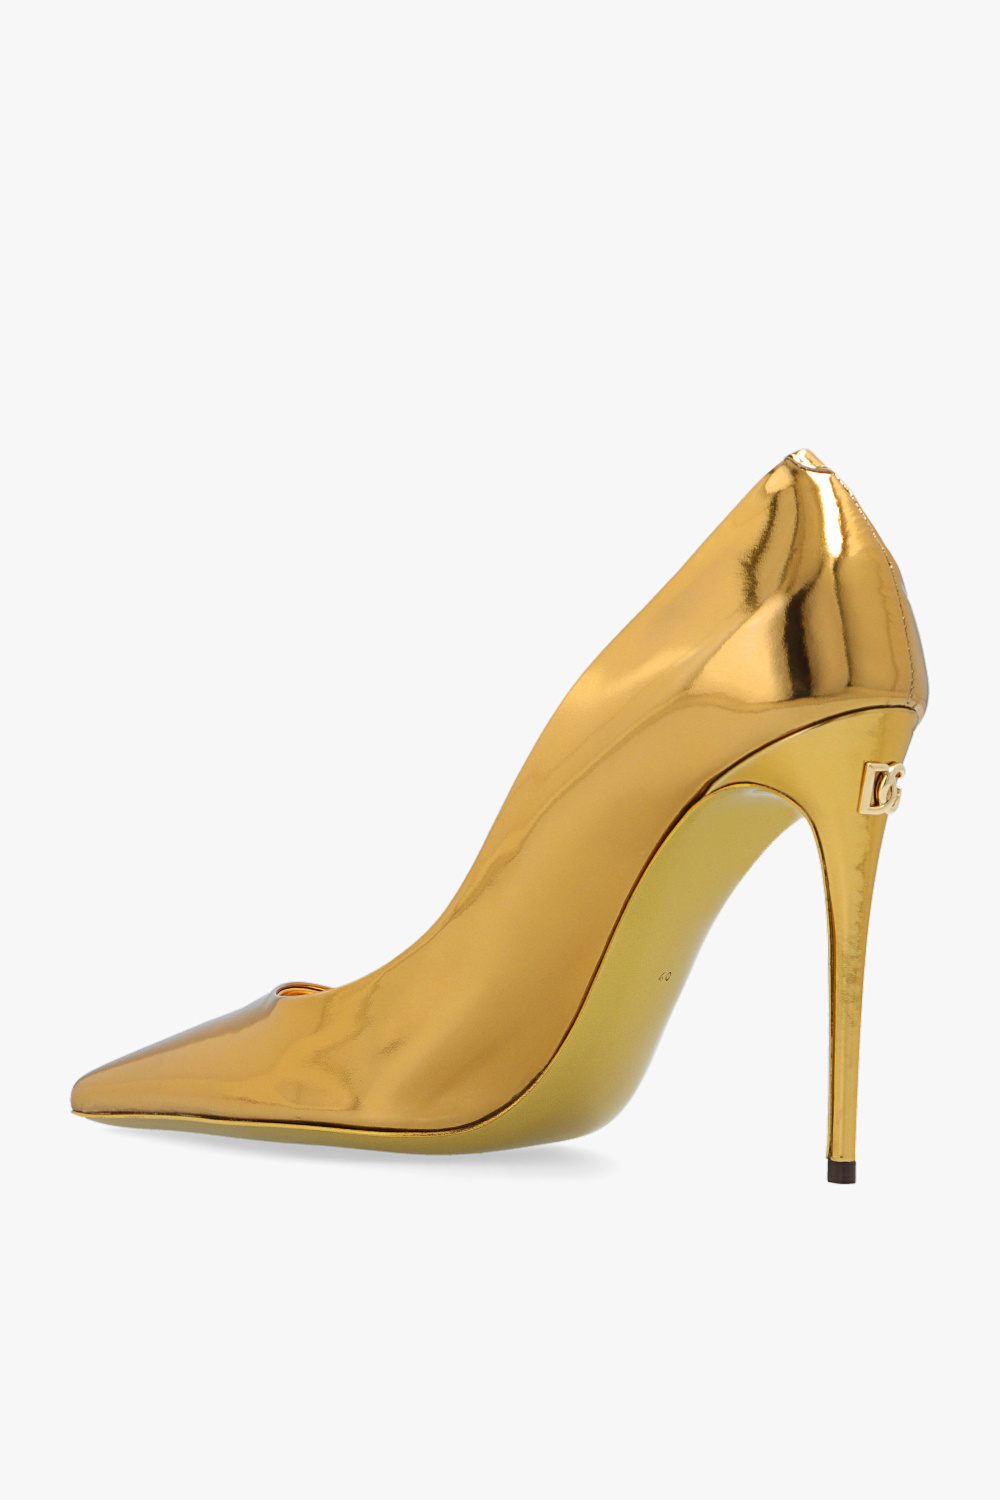 Кресло-качалка carrello printed dolce crl-7501 canary yellow ‘Lollo’ stiletto pumps